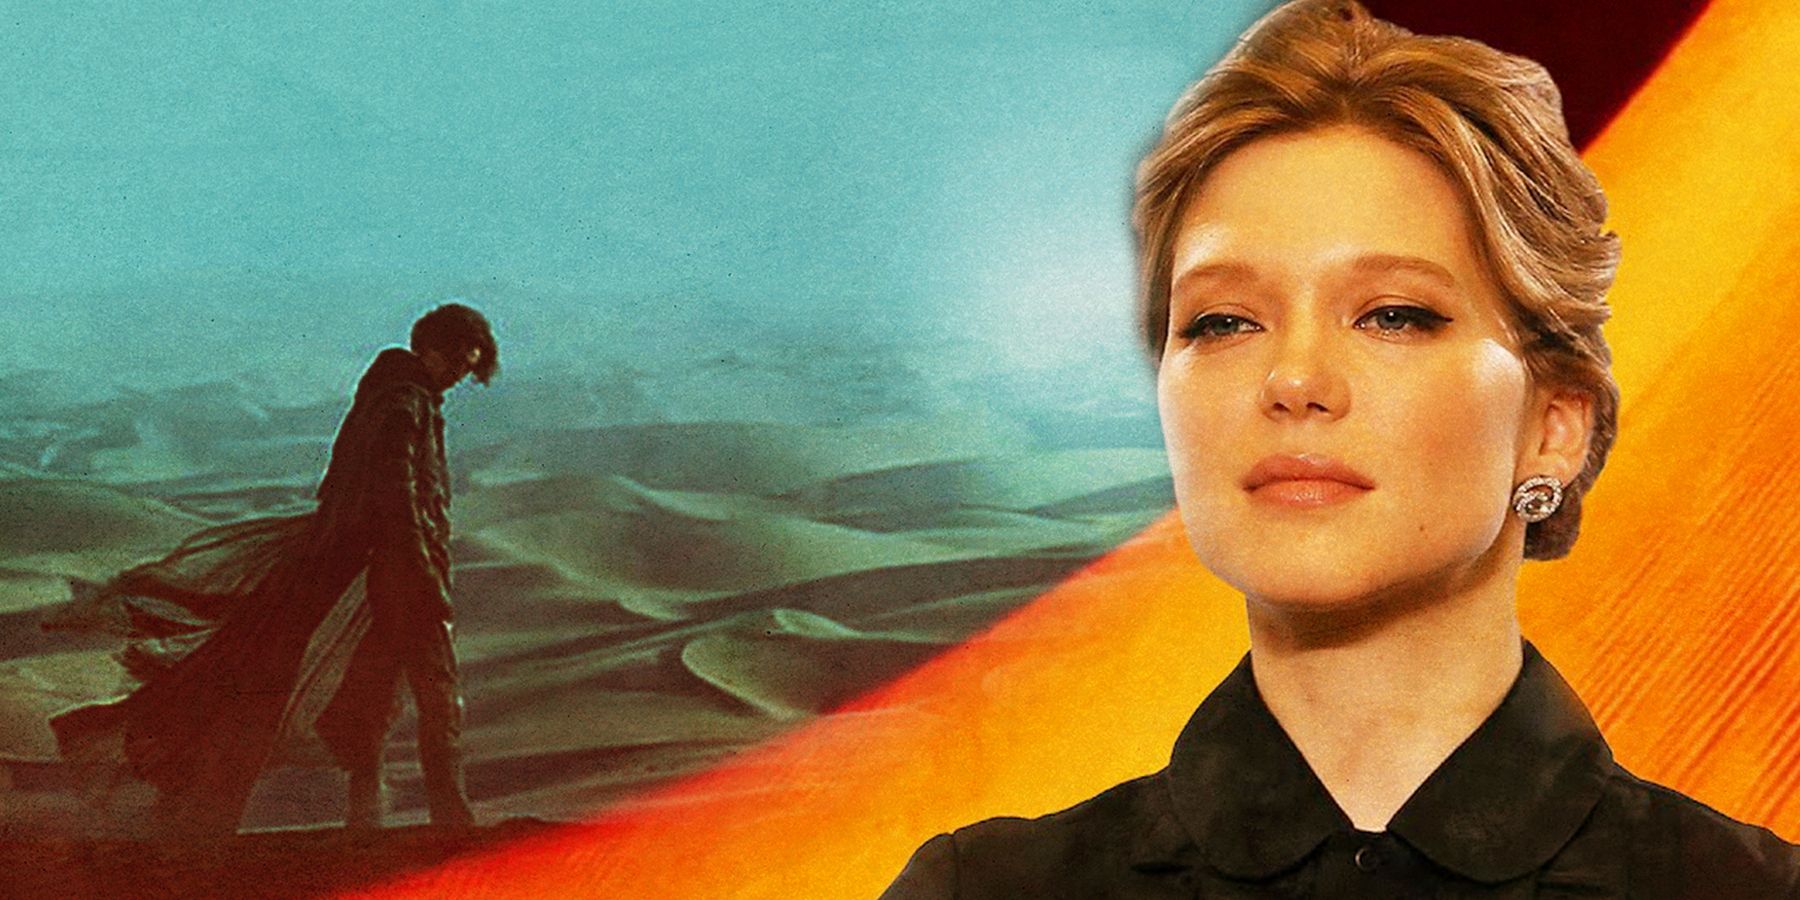 Dune Part 2': Léa Seydoux Joins as Lady Margot